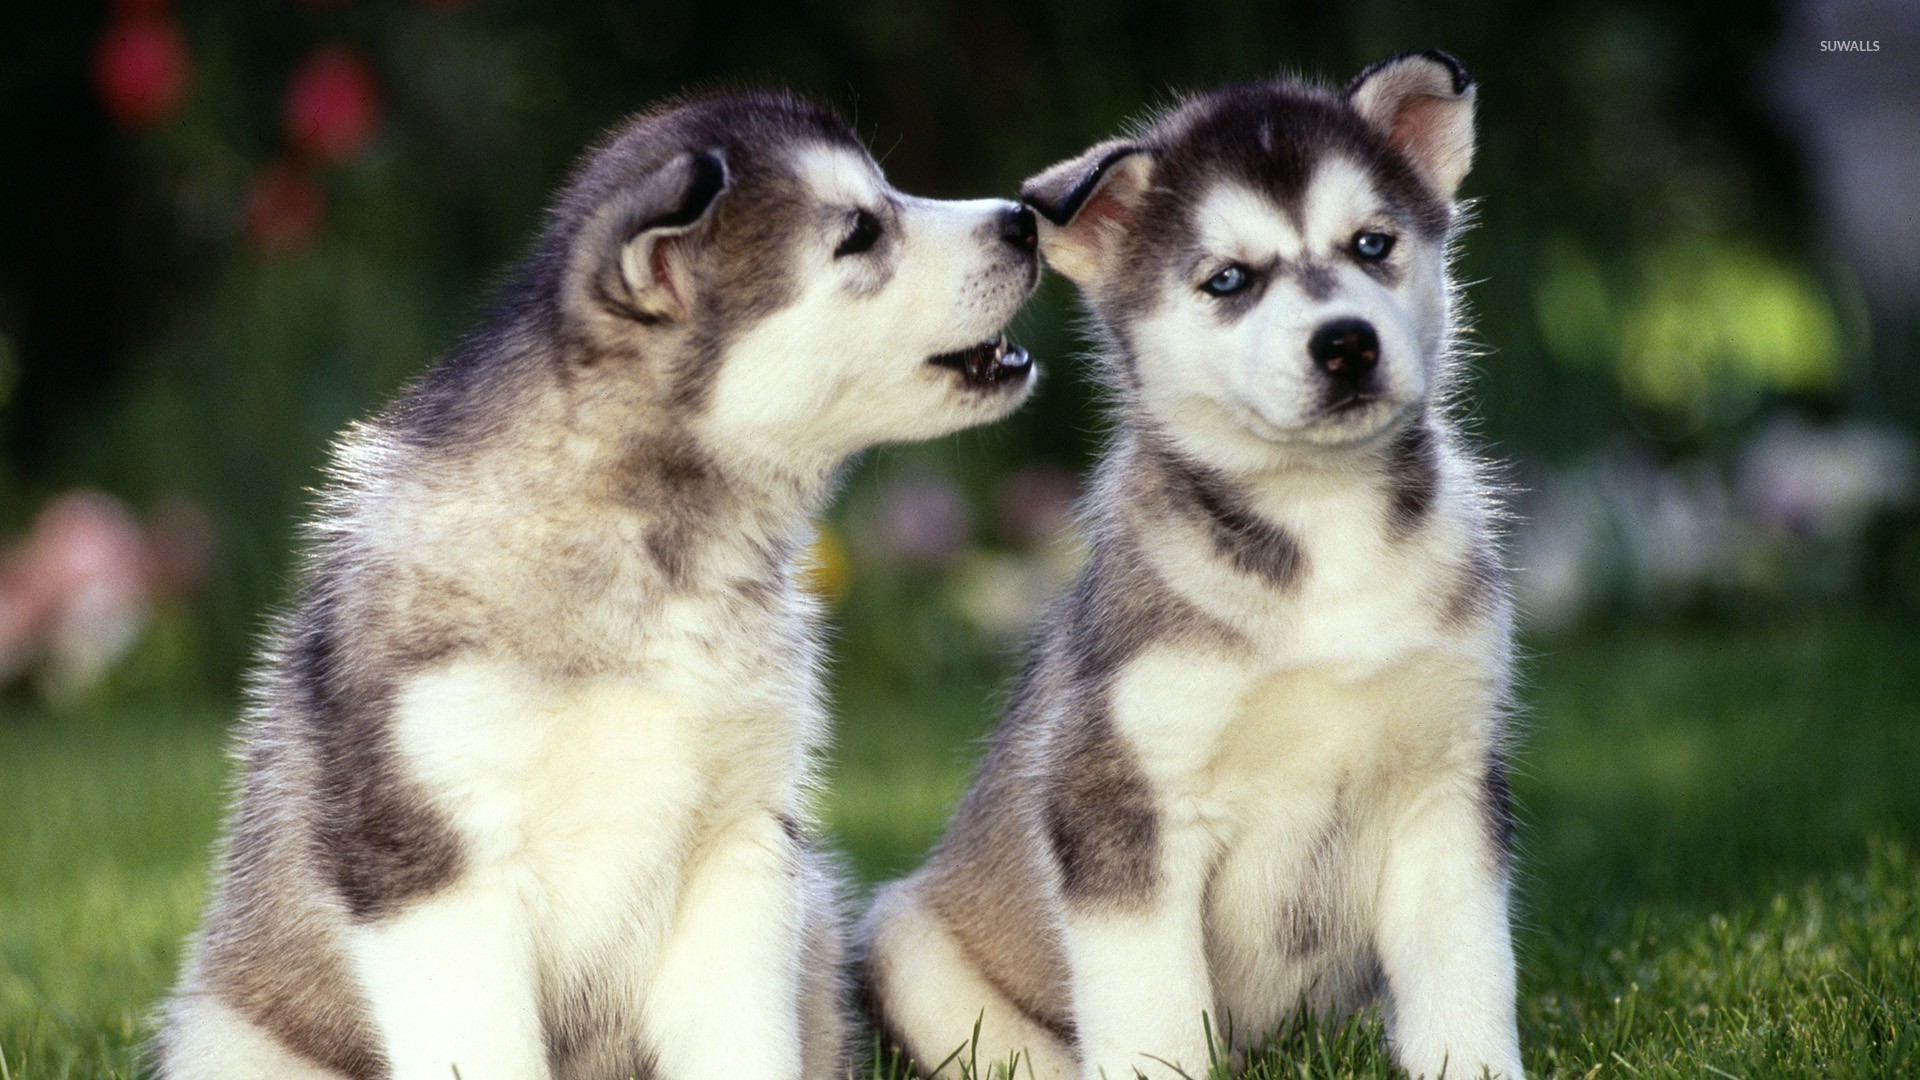 Siberian Husky puppies wallpaper - Animal wallpapers - #22498